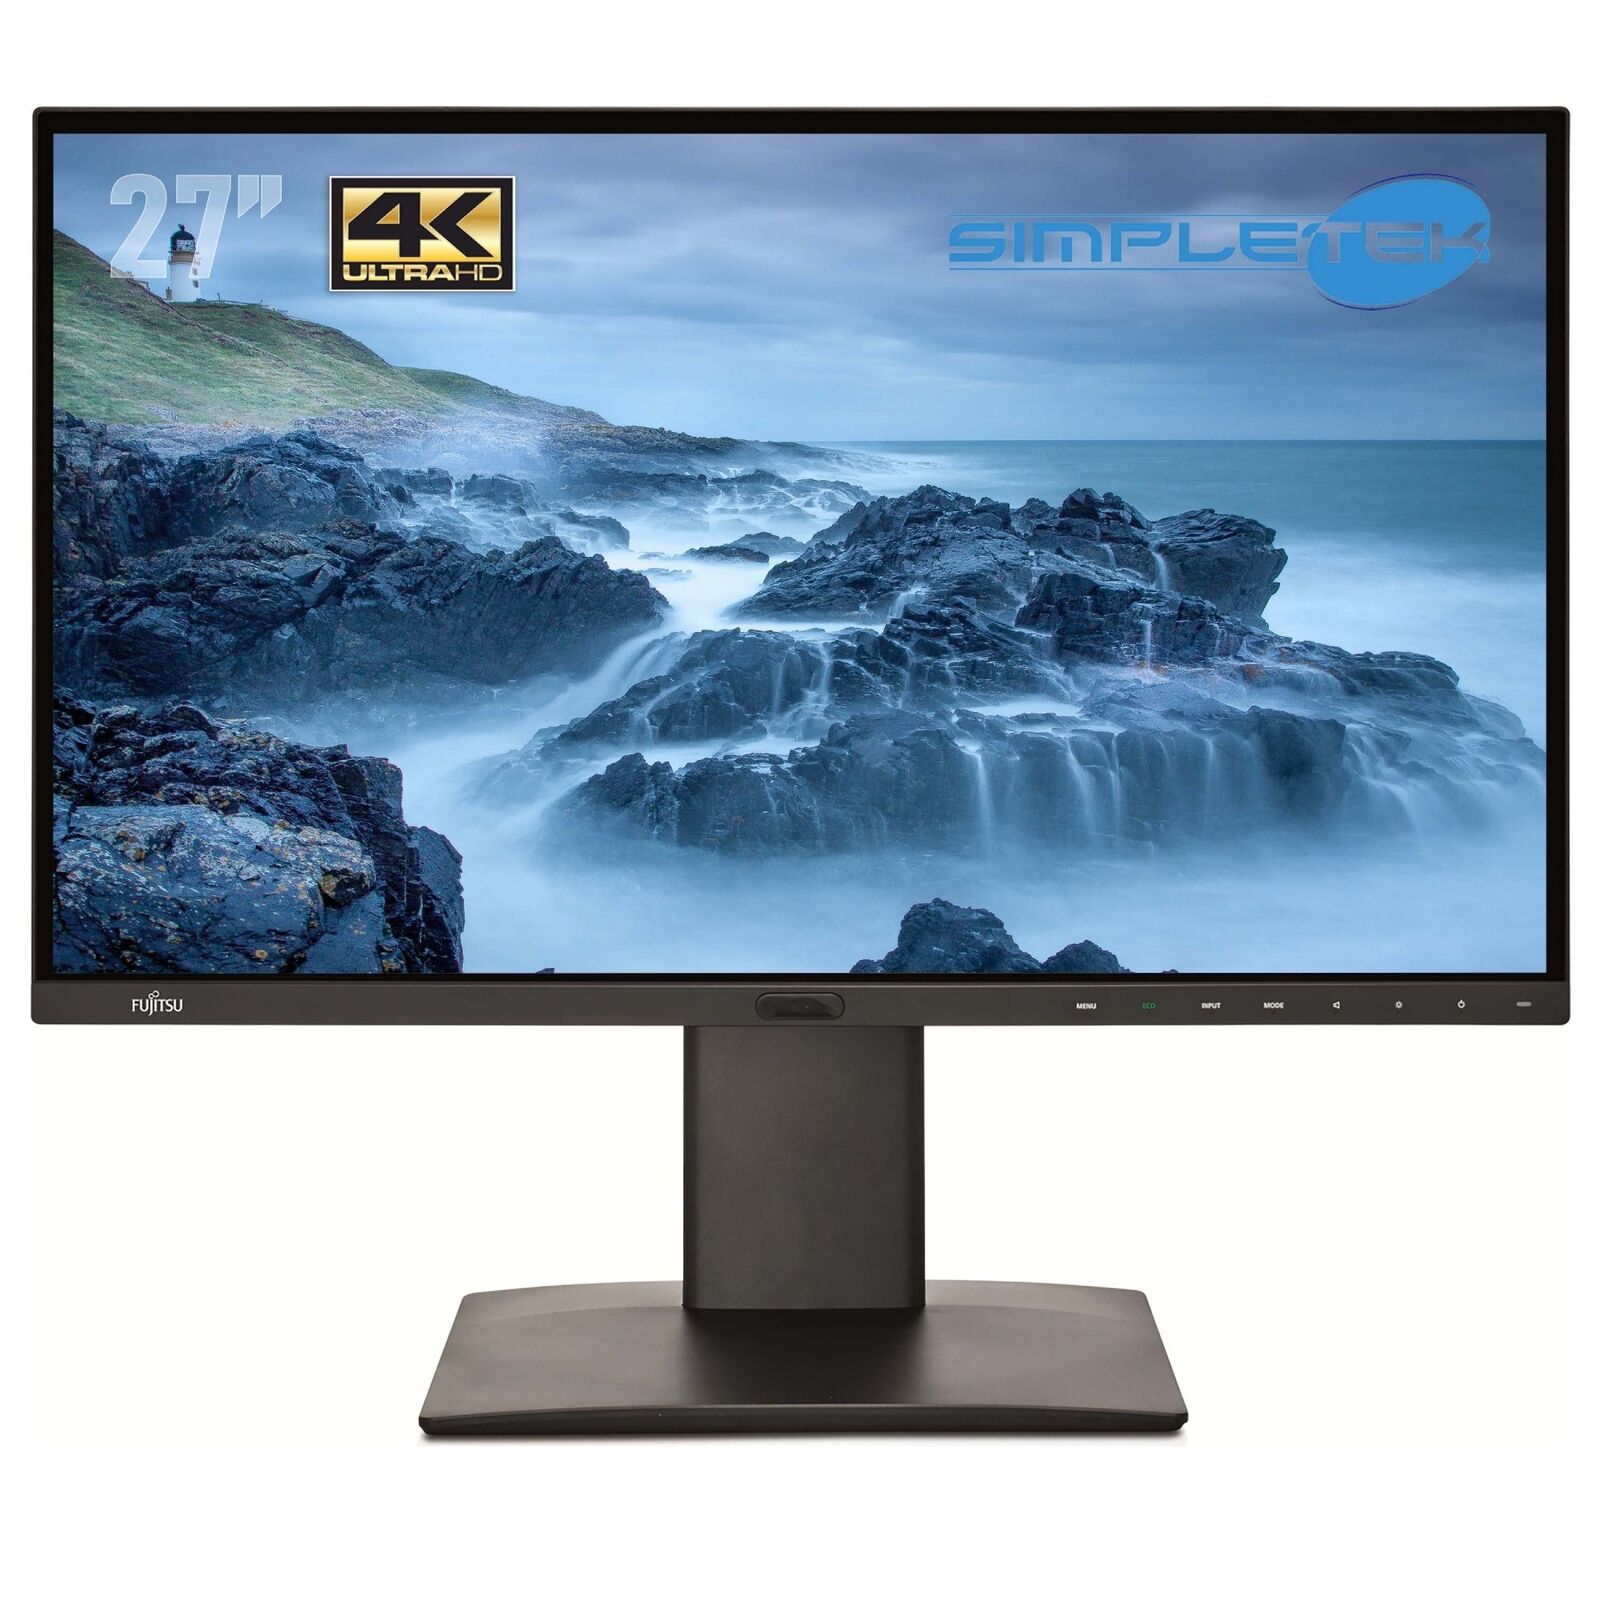 Fujitsu P27-8 UHD Monitor 27” 4K 16:9 LED Professional Screen LCD Display PC